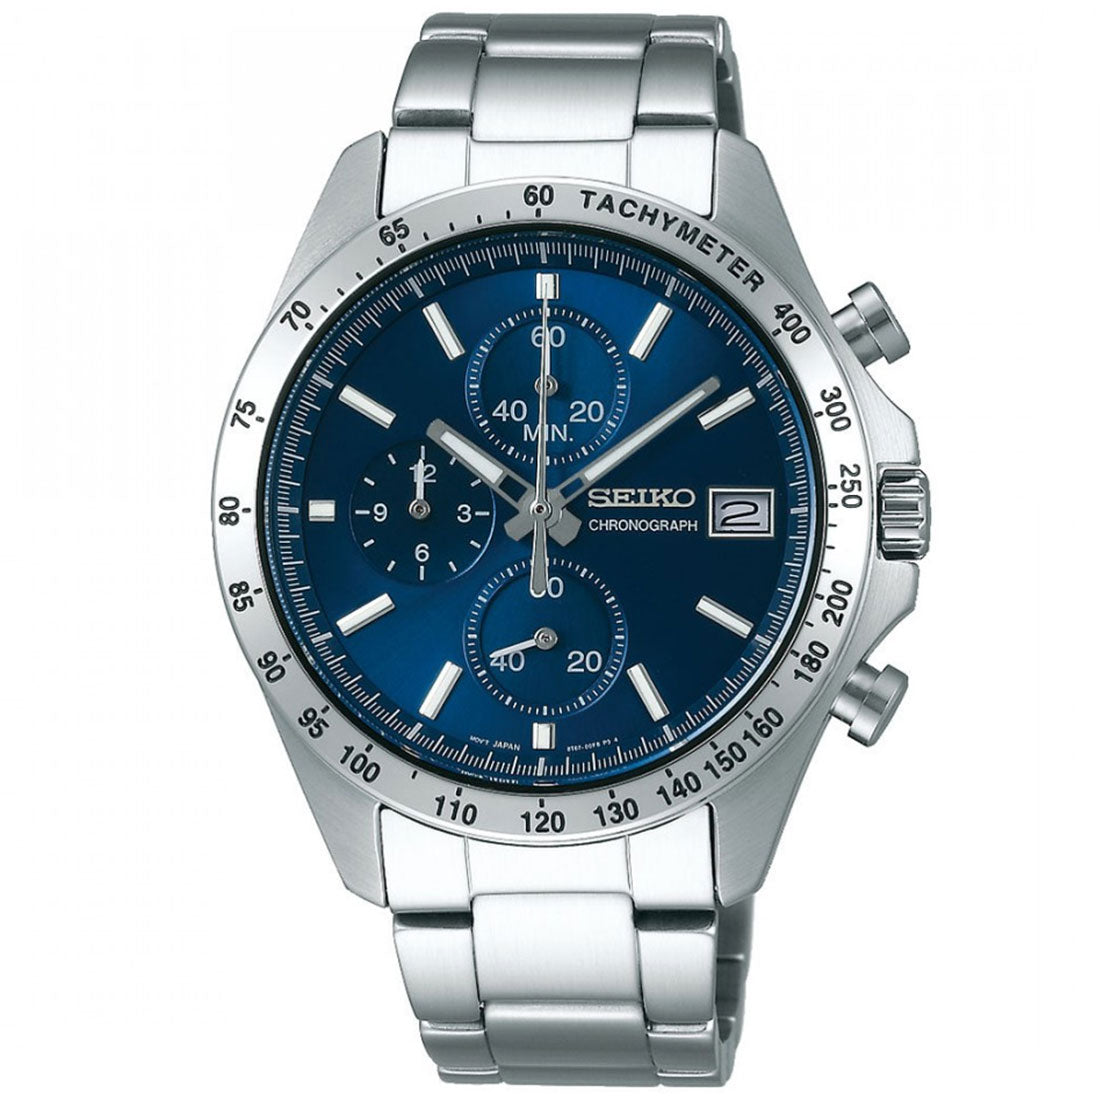 Seiko SBTR023 JDM  Spirit Selection Chronograph Blue Dial Quartz Male Watch